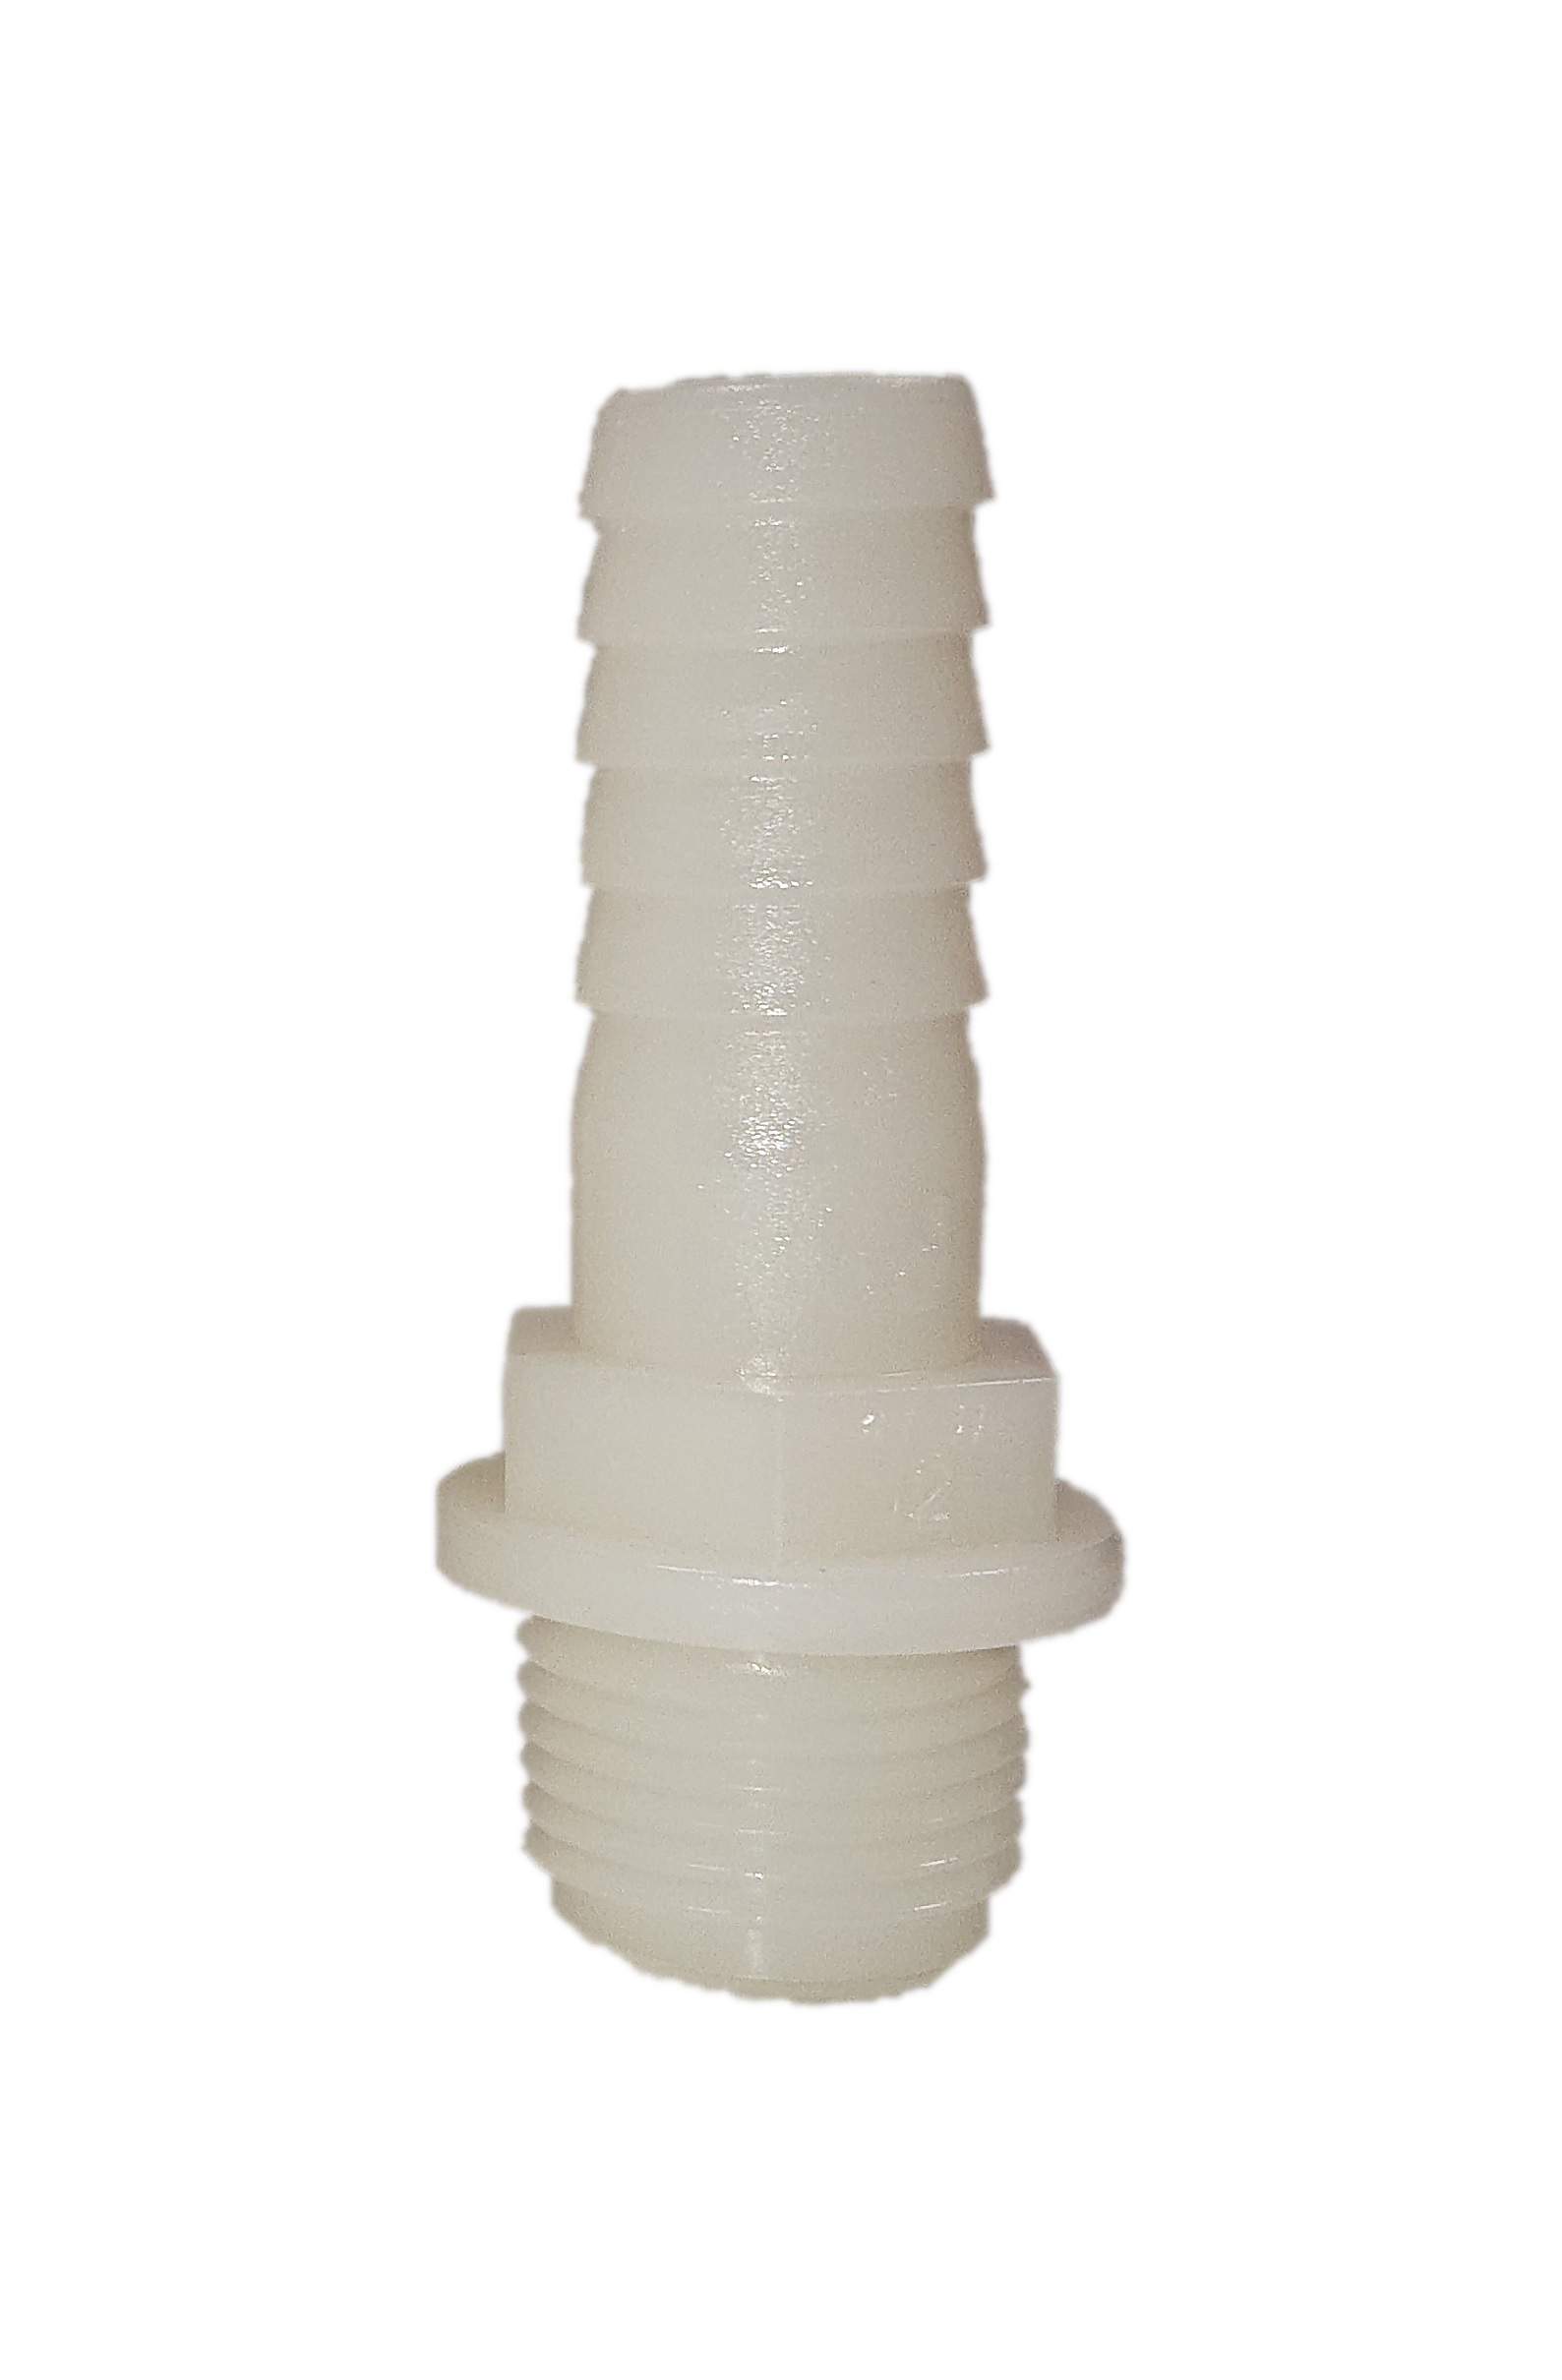 Male polyamide hose barb 15x21 for 16mm hose